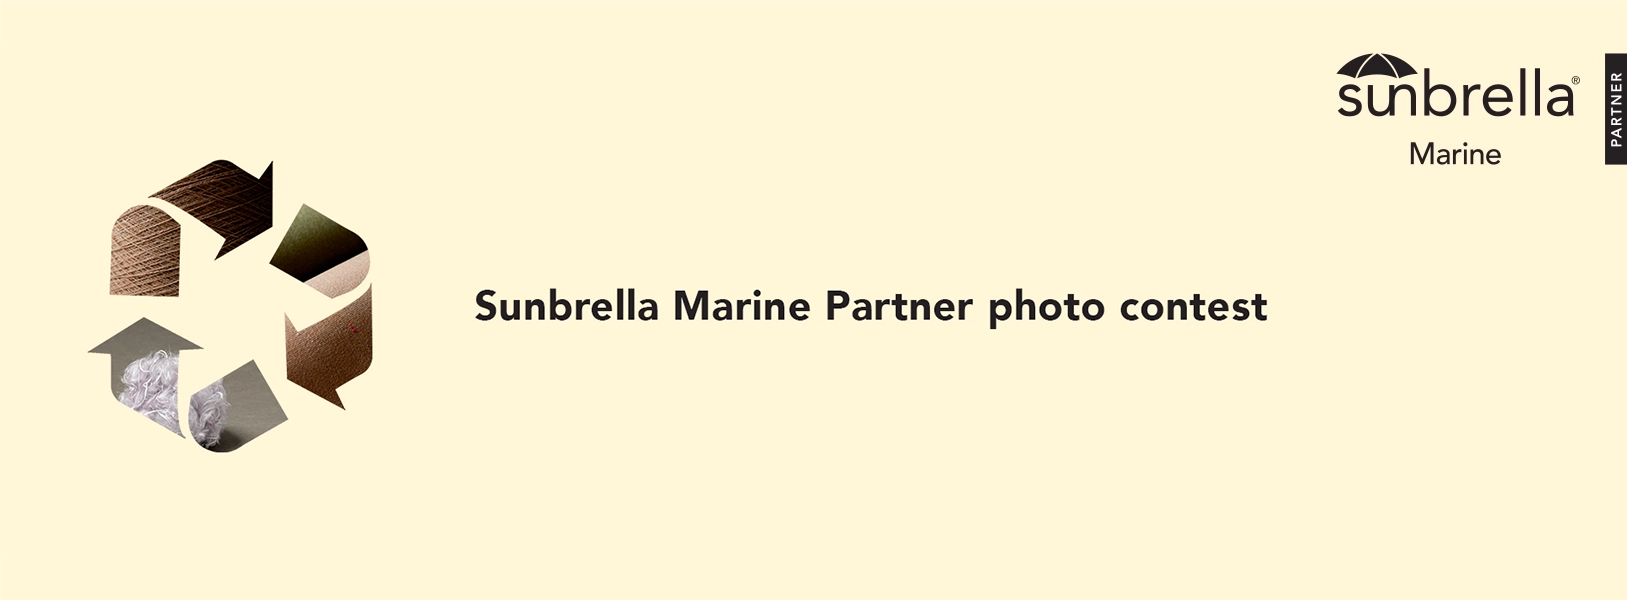 Concurso fotográfico UPCYCLING para Sunbrella Marine Partners